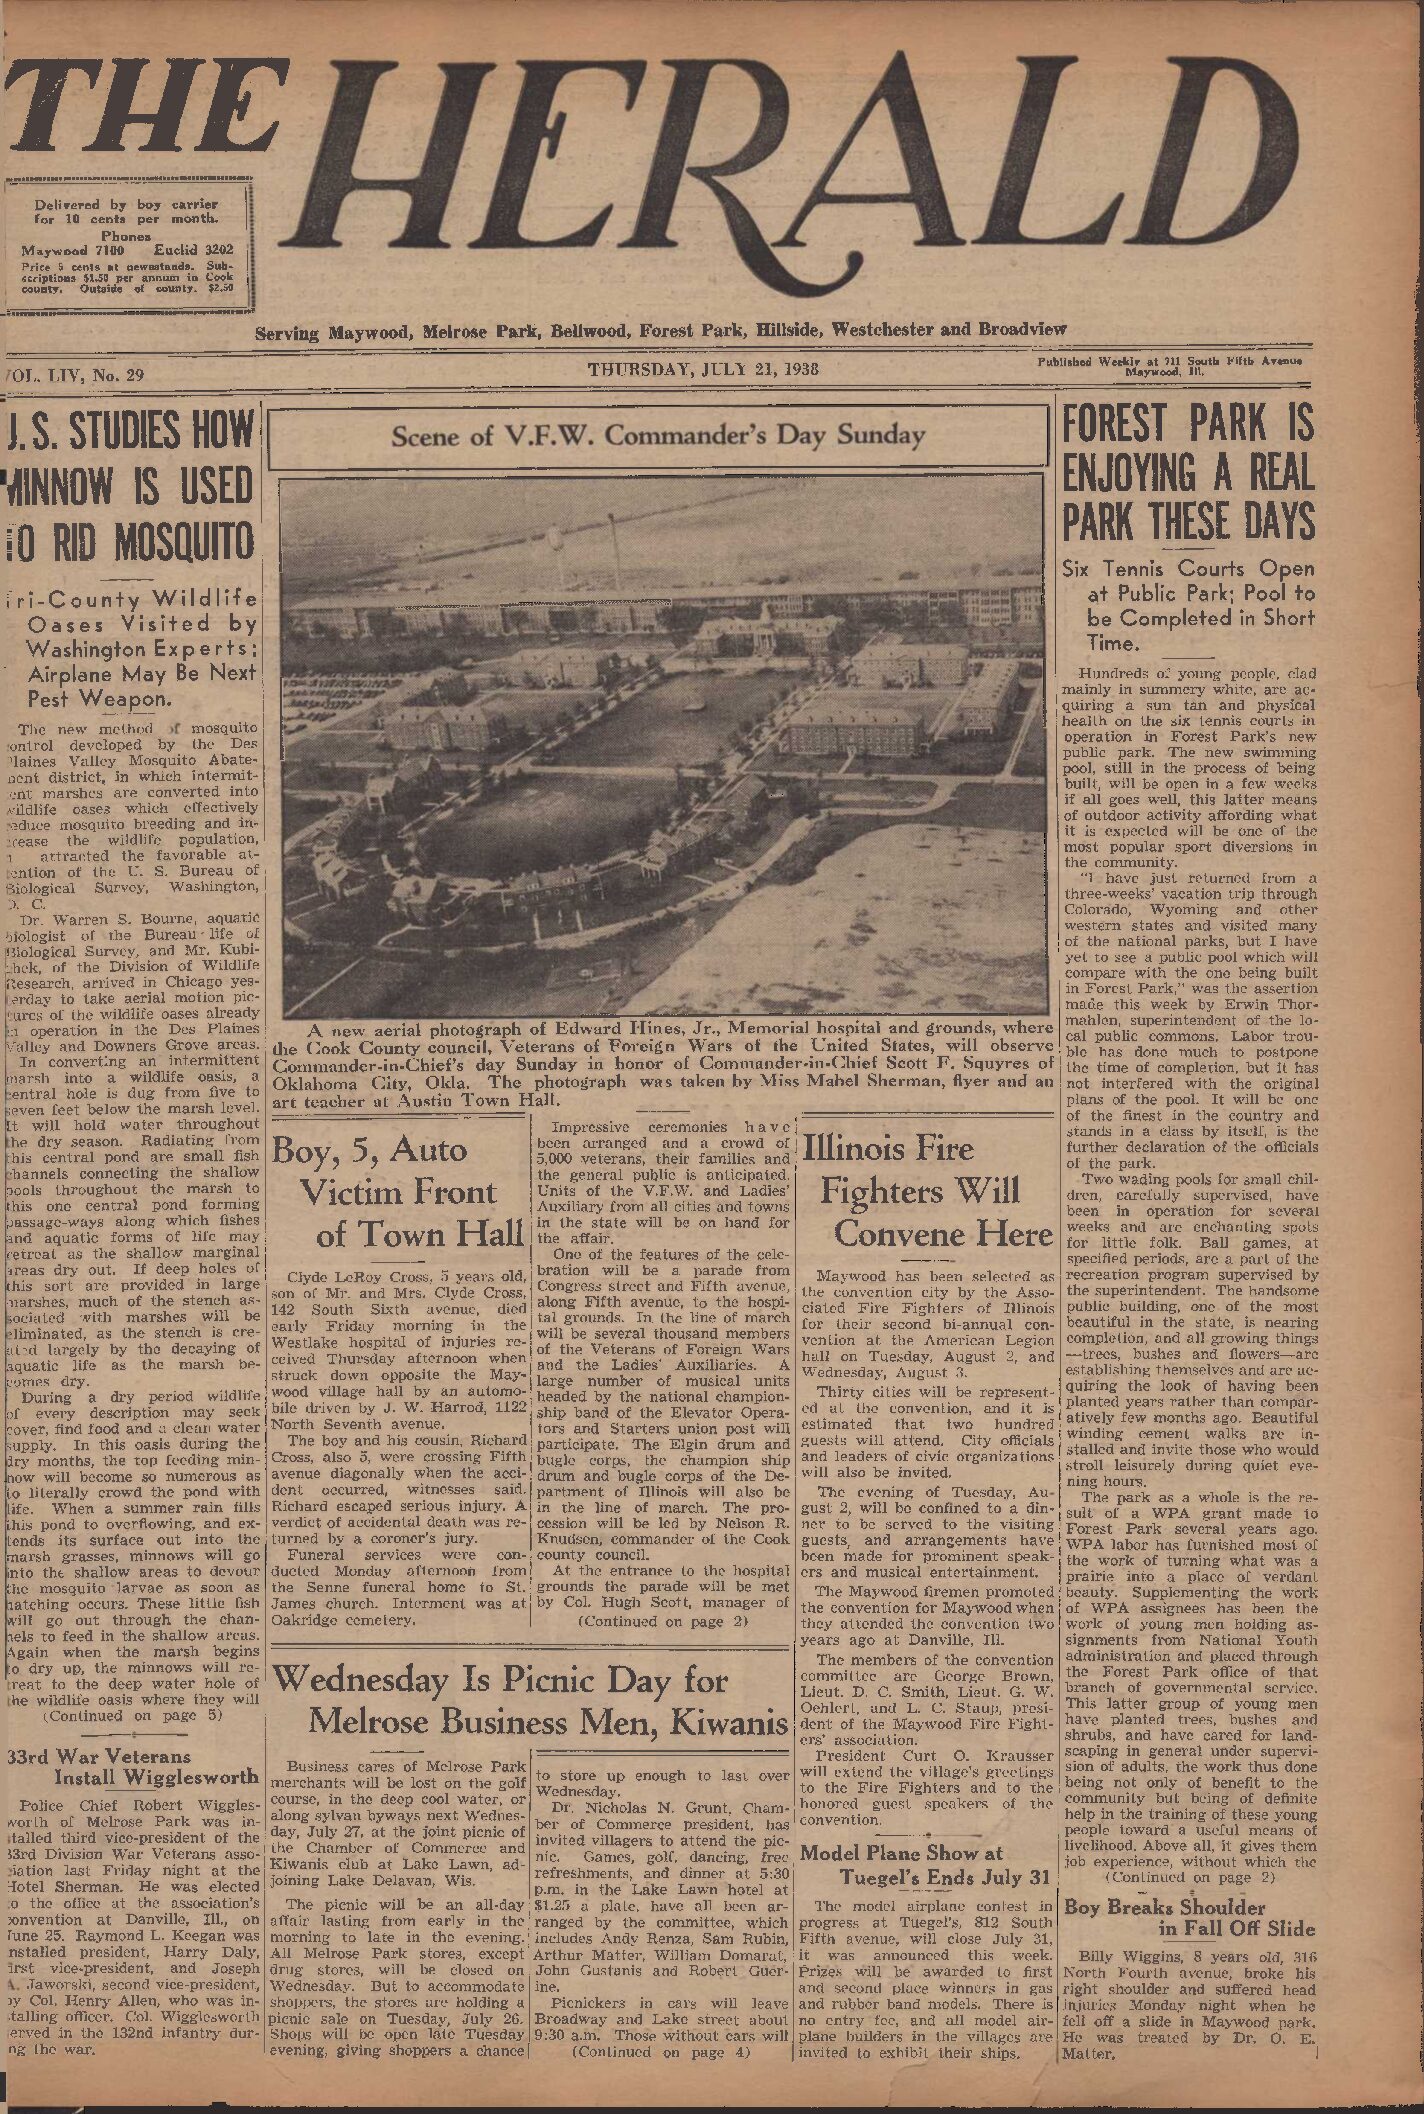 The Herald – 19380721